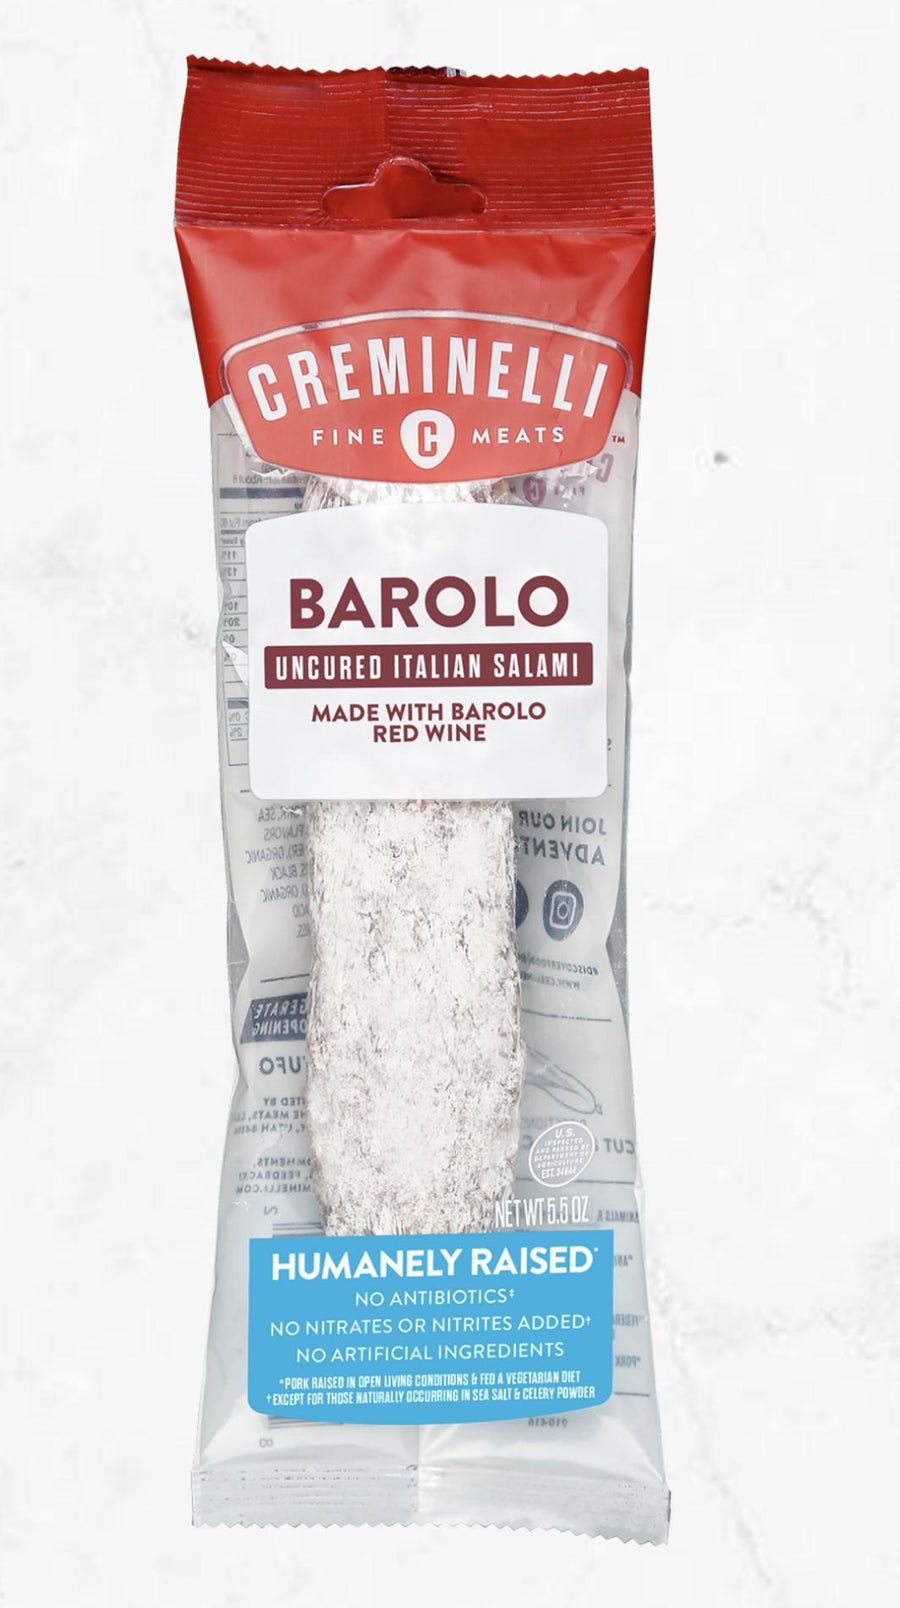 Creminelli - Barolo Uncured Italian salami